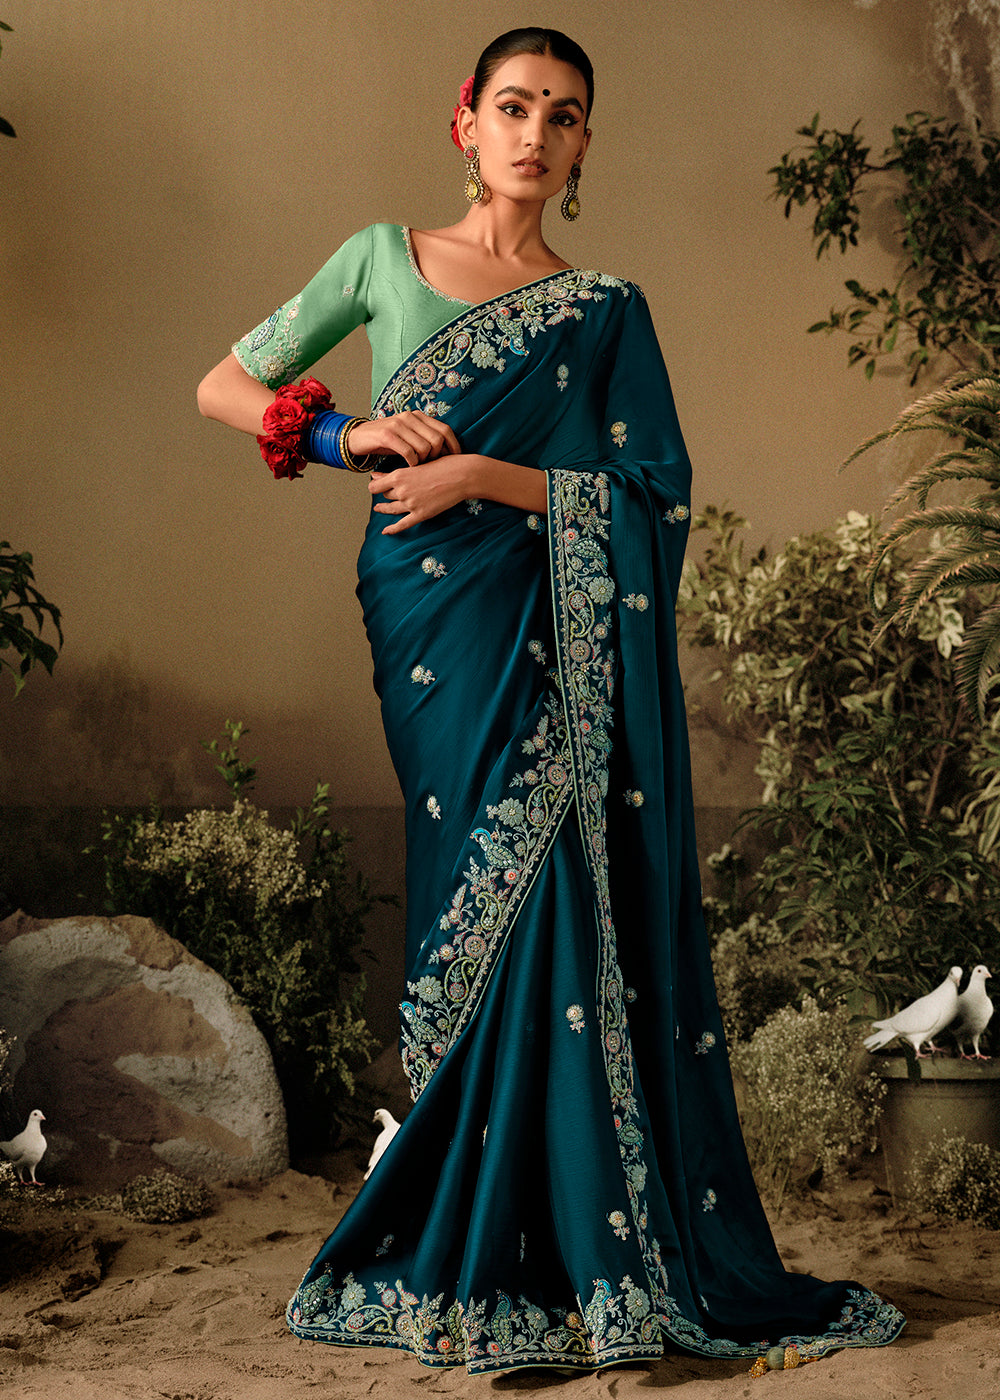 Buy Now Peacock Blue Khatli Work Embroidered Designer Wedding Saree Online in USA, UK, Canada & Worldwide at Empress Clothing. 